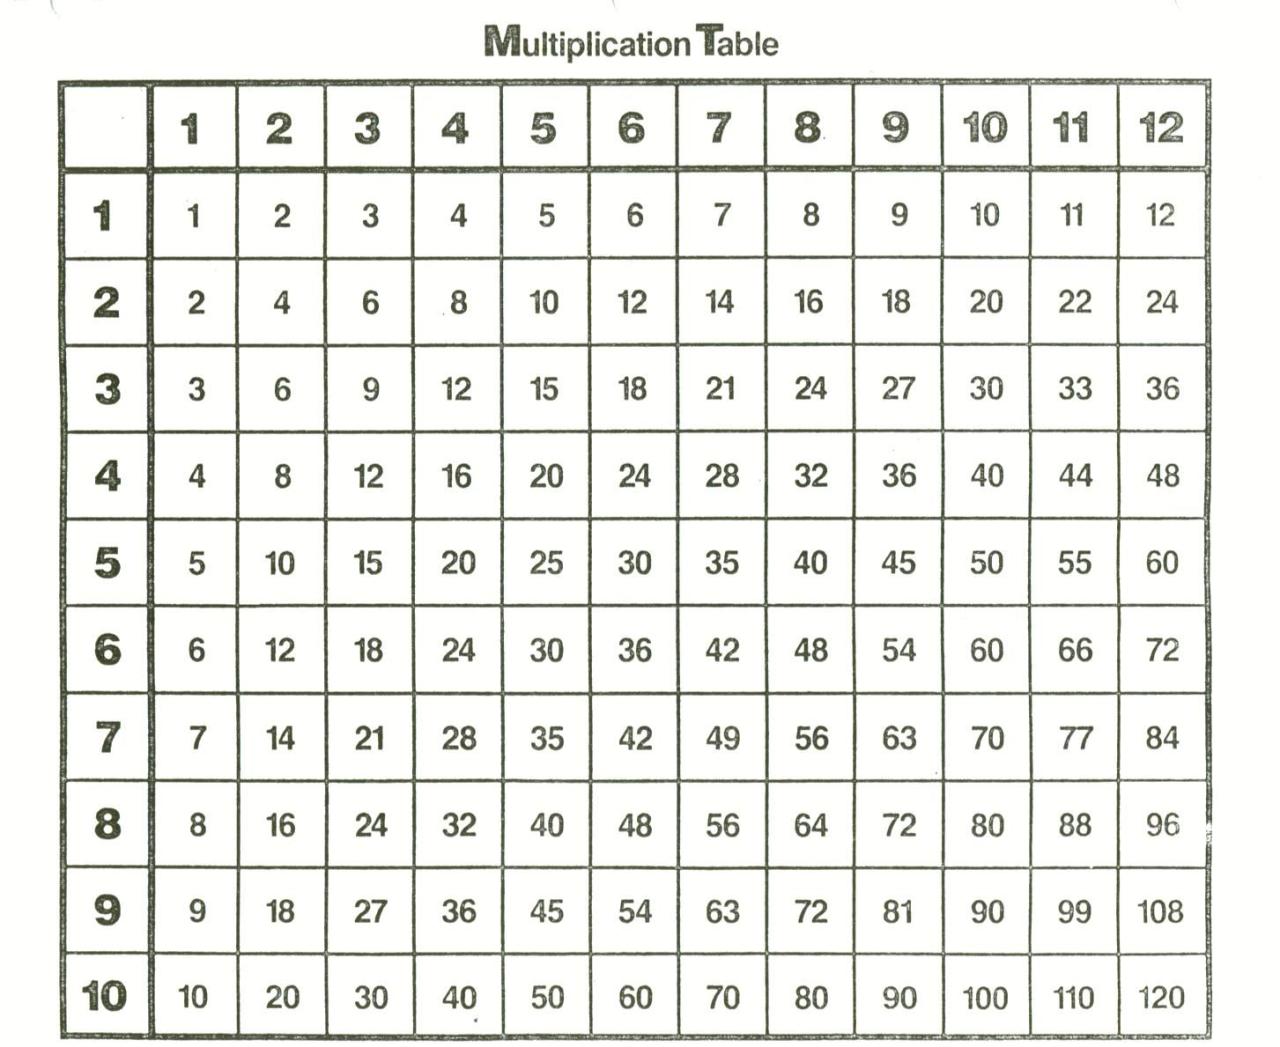 Multiplication Tables 1-12 Printable Pdf